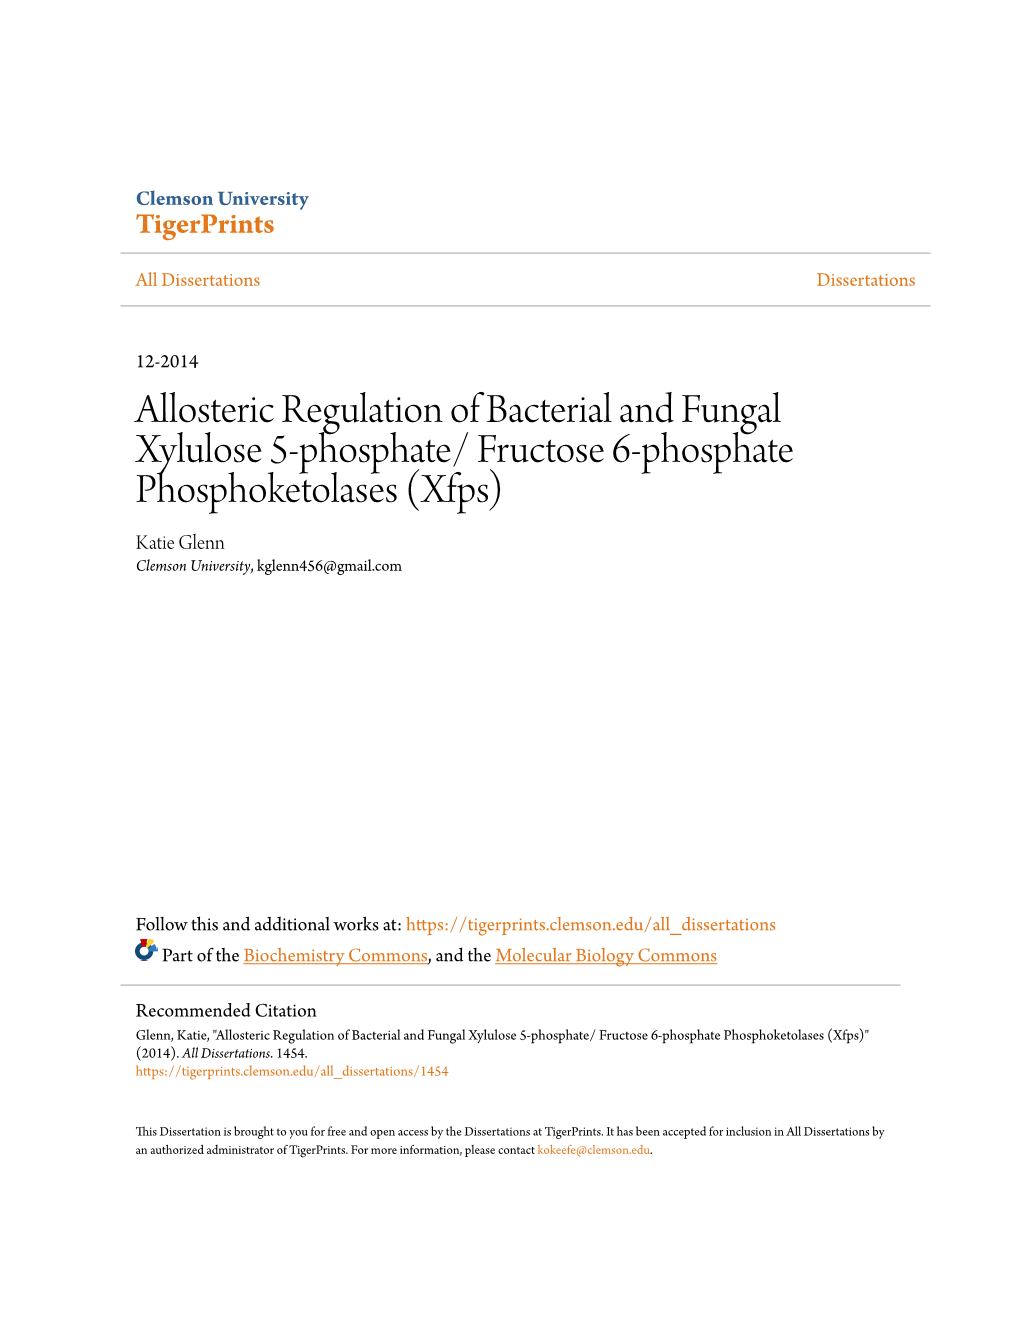 Fructose 6-Phosphate Phosphoketolases (Xfps) Katie Glenn Clemson University, Kglenn456@Gmail.Com